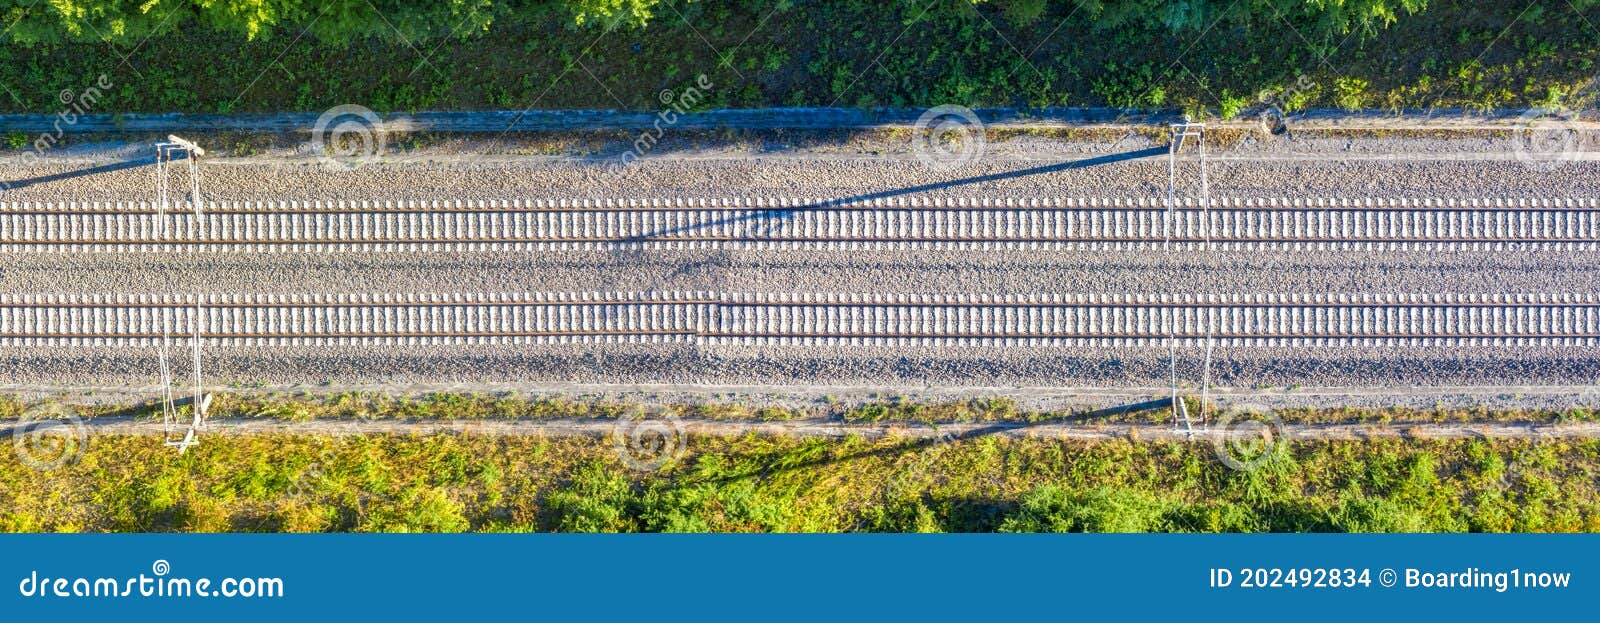 railway track tracks line railroad train rail aerial photo panoramic view